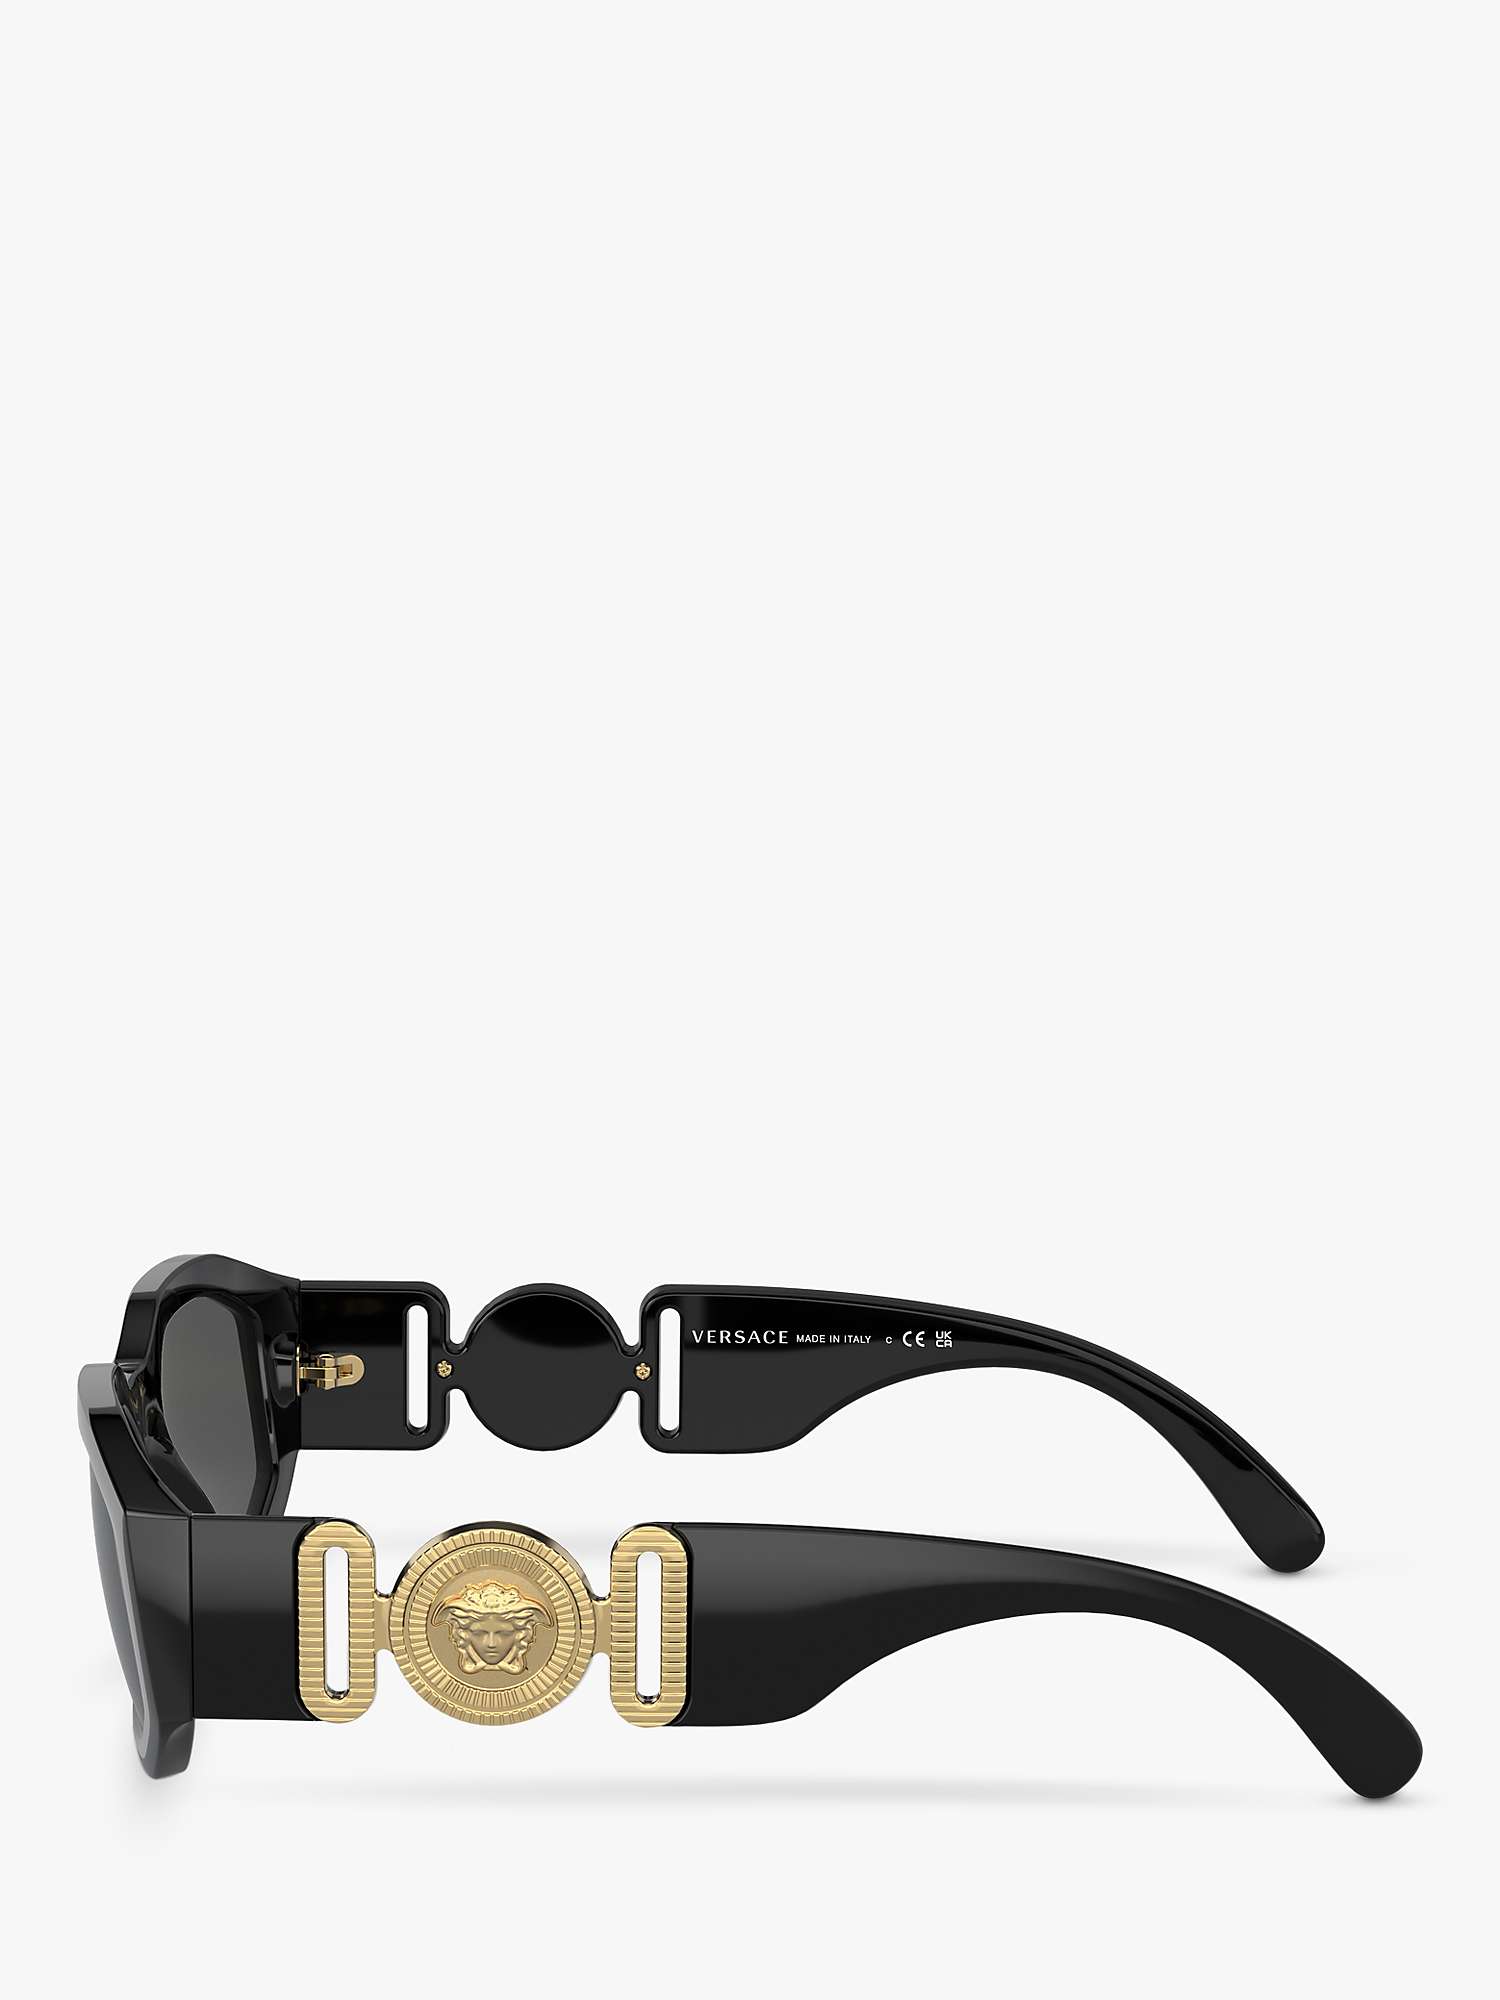 Buy Versace VE4361 Women's Square Sunglasses, Black/Grey Online at johnlewis.com